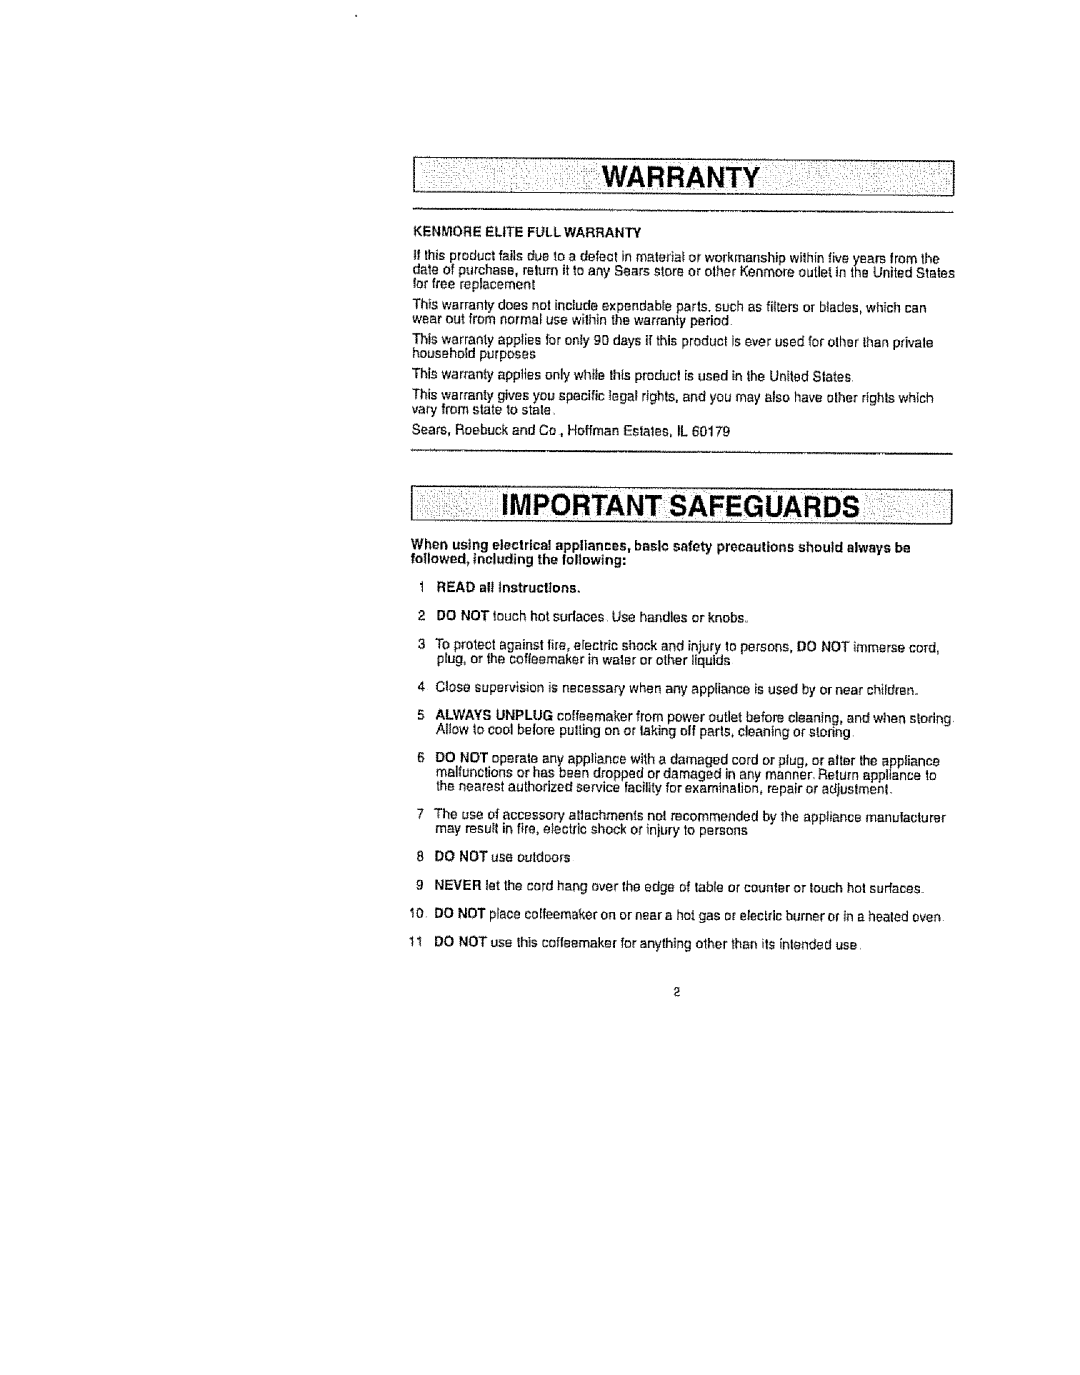 Kenmore 100.90007 operating instructions Ken Ore Elite Full Warranty, READ atilnstructions 